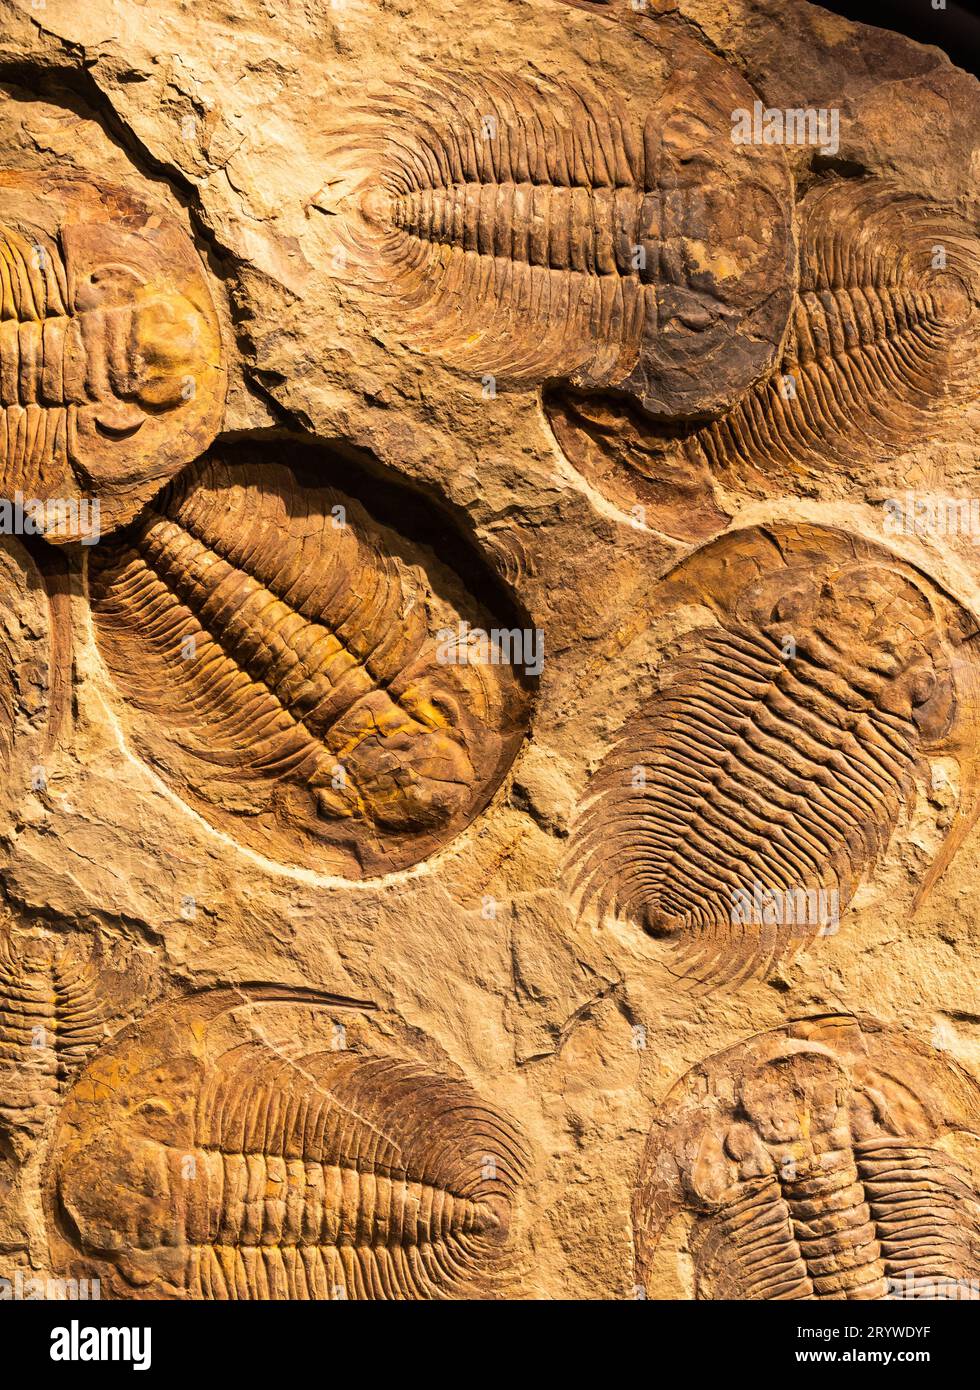 Fossil of Trilobite - Acadoparadoxides briareus - ancient fossilized arthropod on rock. Stock Photo